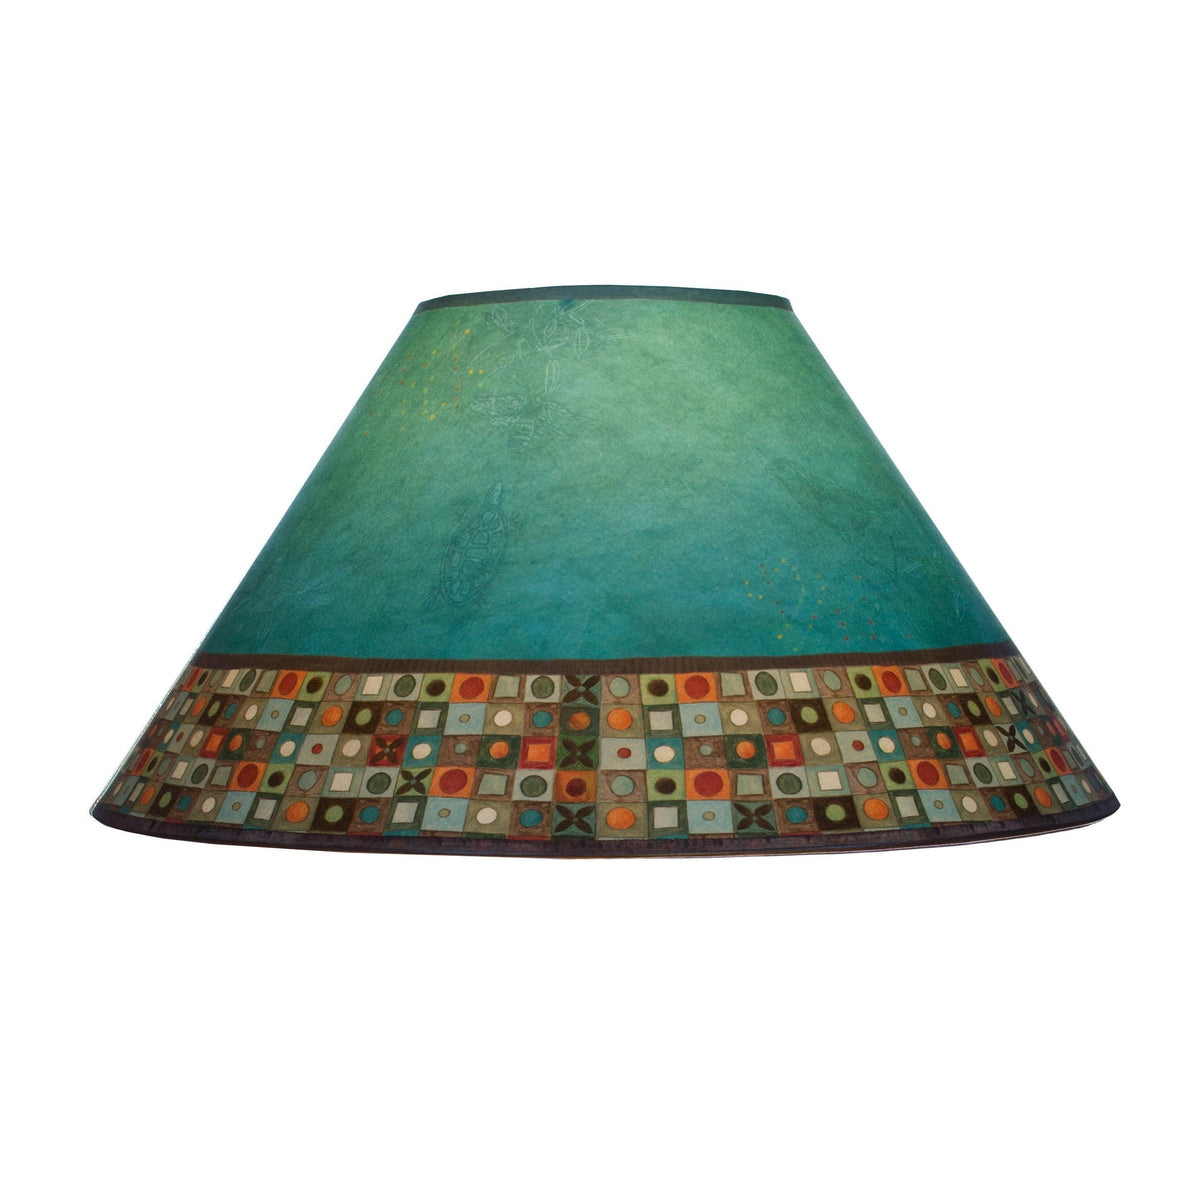 Janna Ugone &amp; Co Lamp Shades Large Conical Lamp Shade in Jade Mosaic